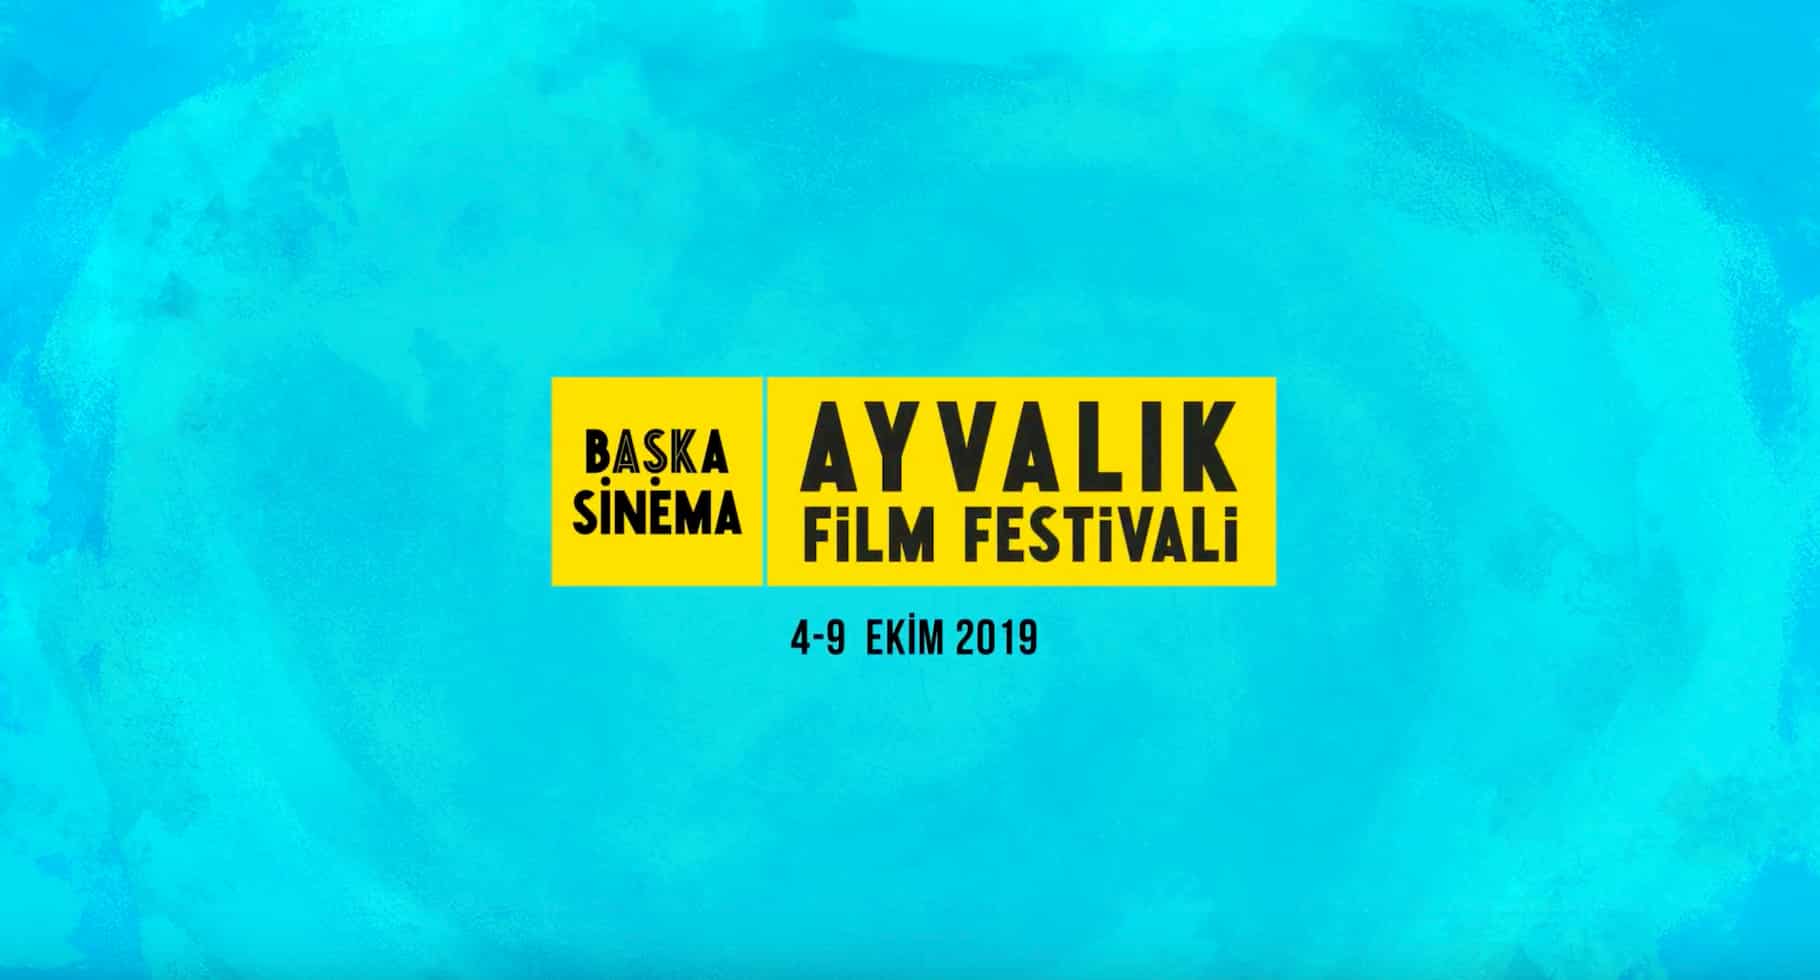 başka sinema ayvalık film festivali 2019